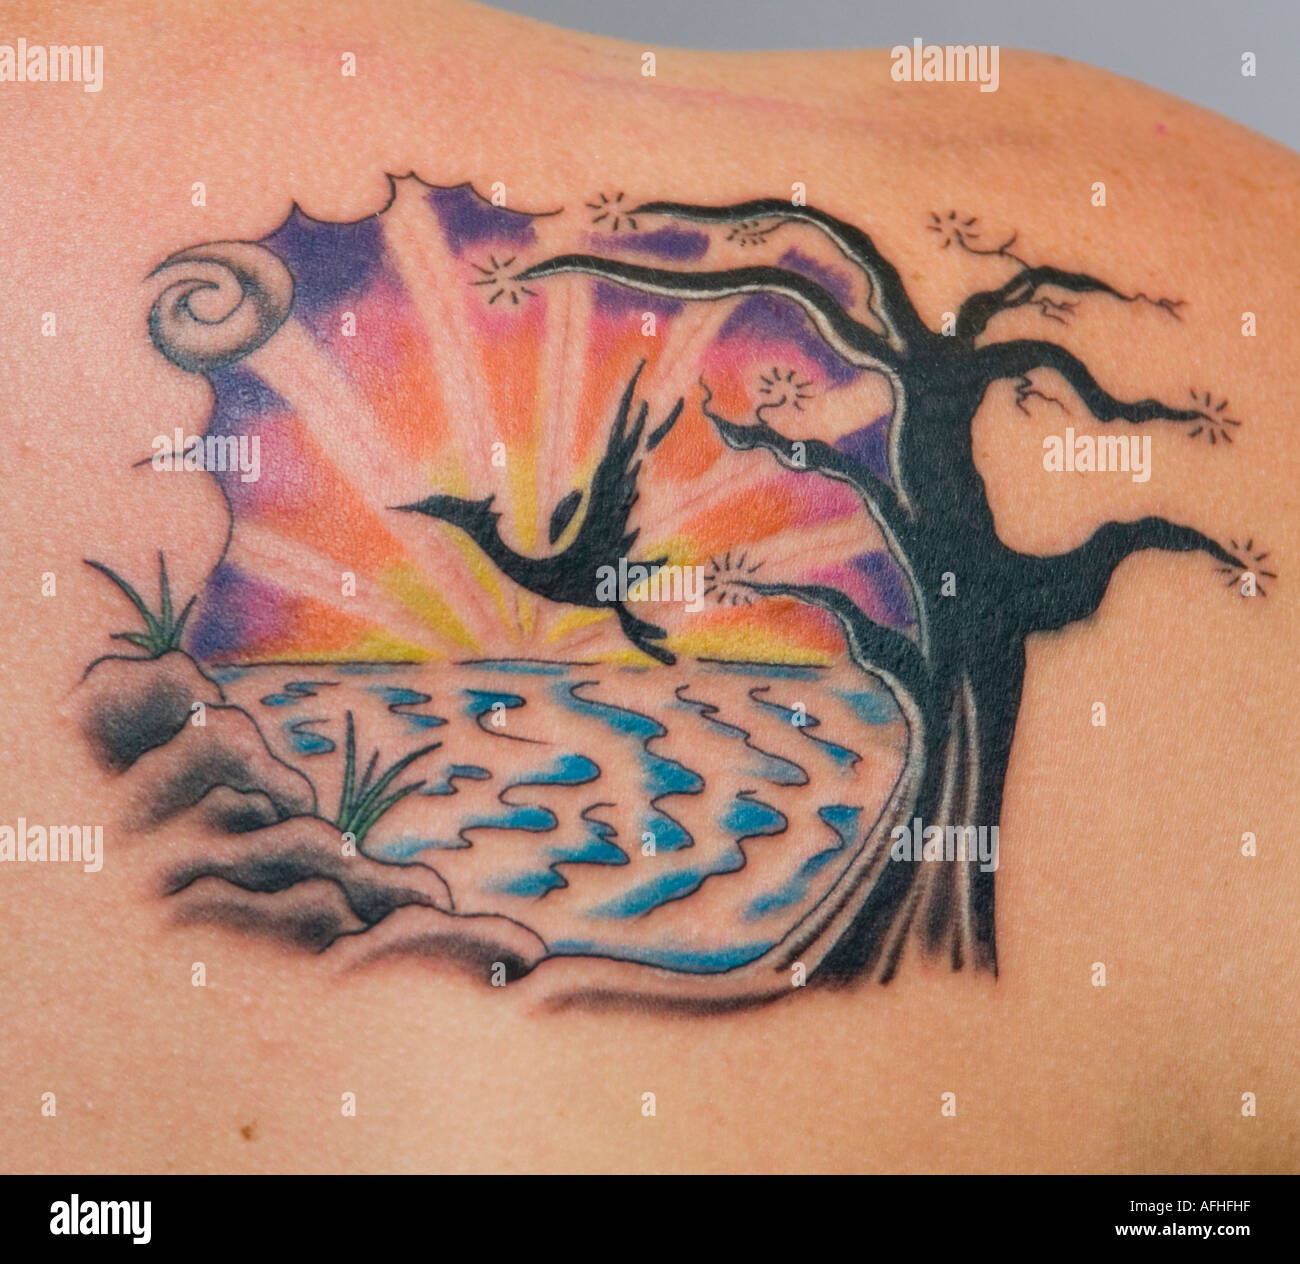 Martin Tattooer Zincik - Abstract Bird tattoo by TattooBulldog on DeviantArt